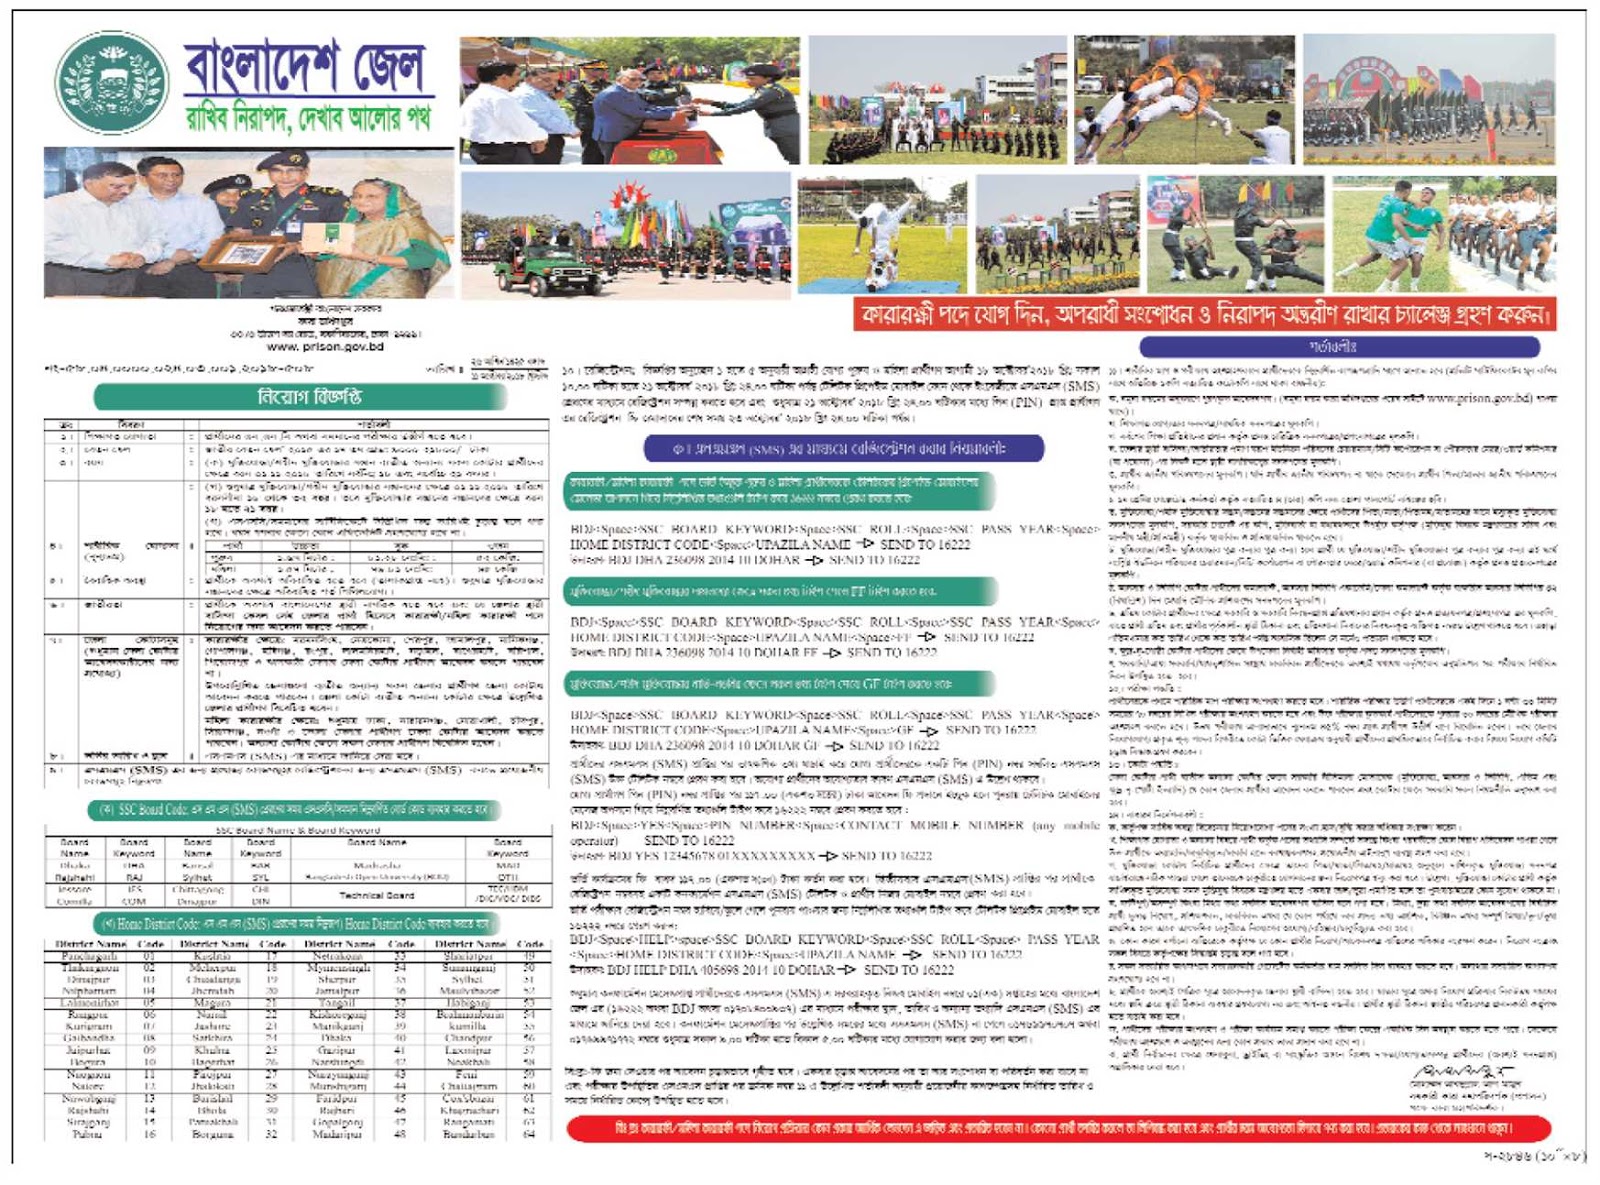 Bangladesh Jail Prison Guard Recruitment Circular 2018